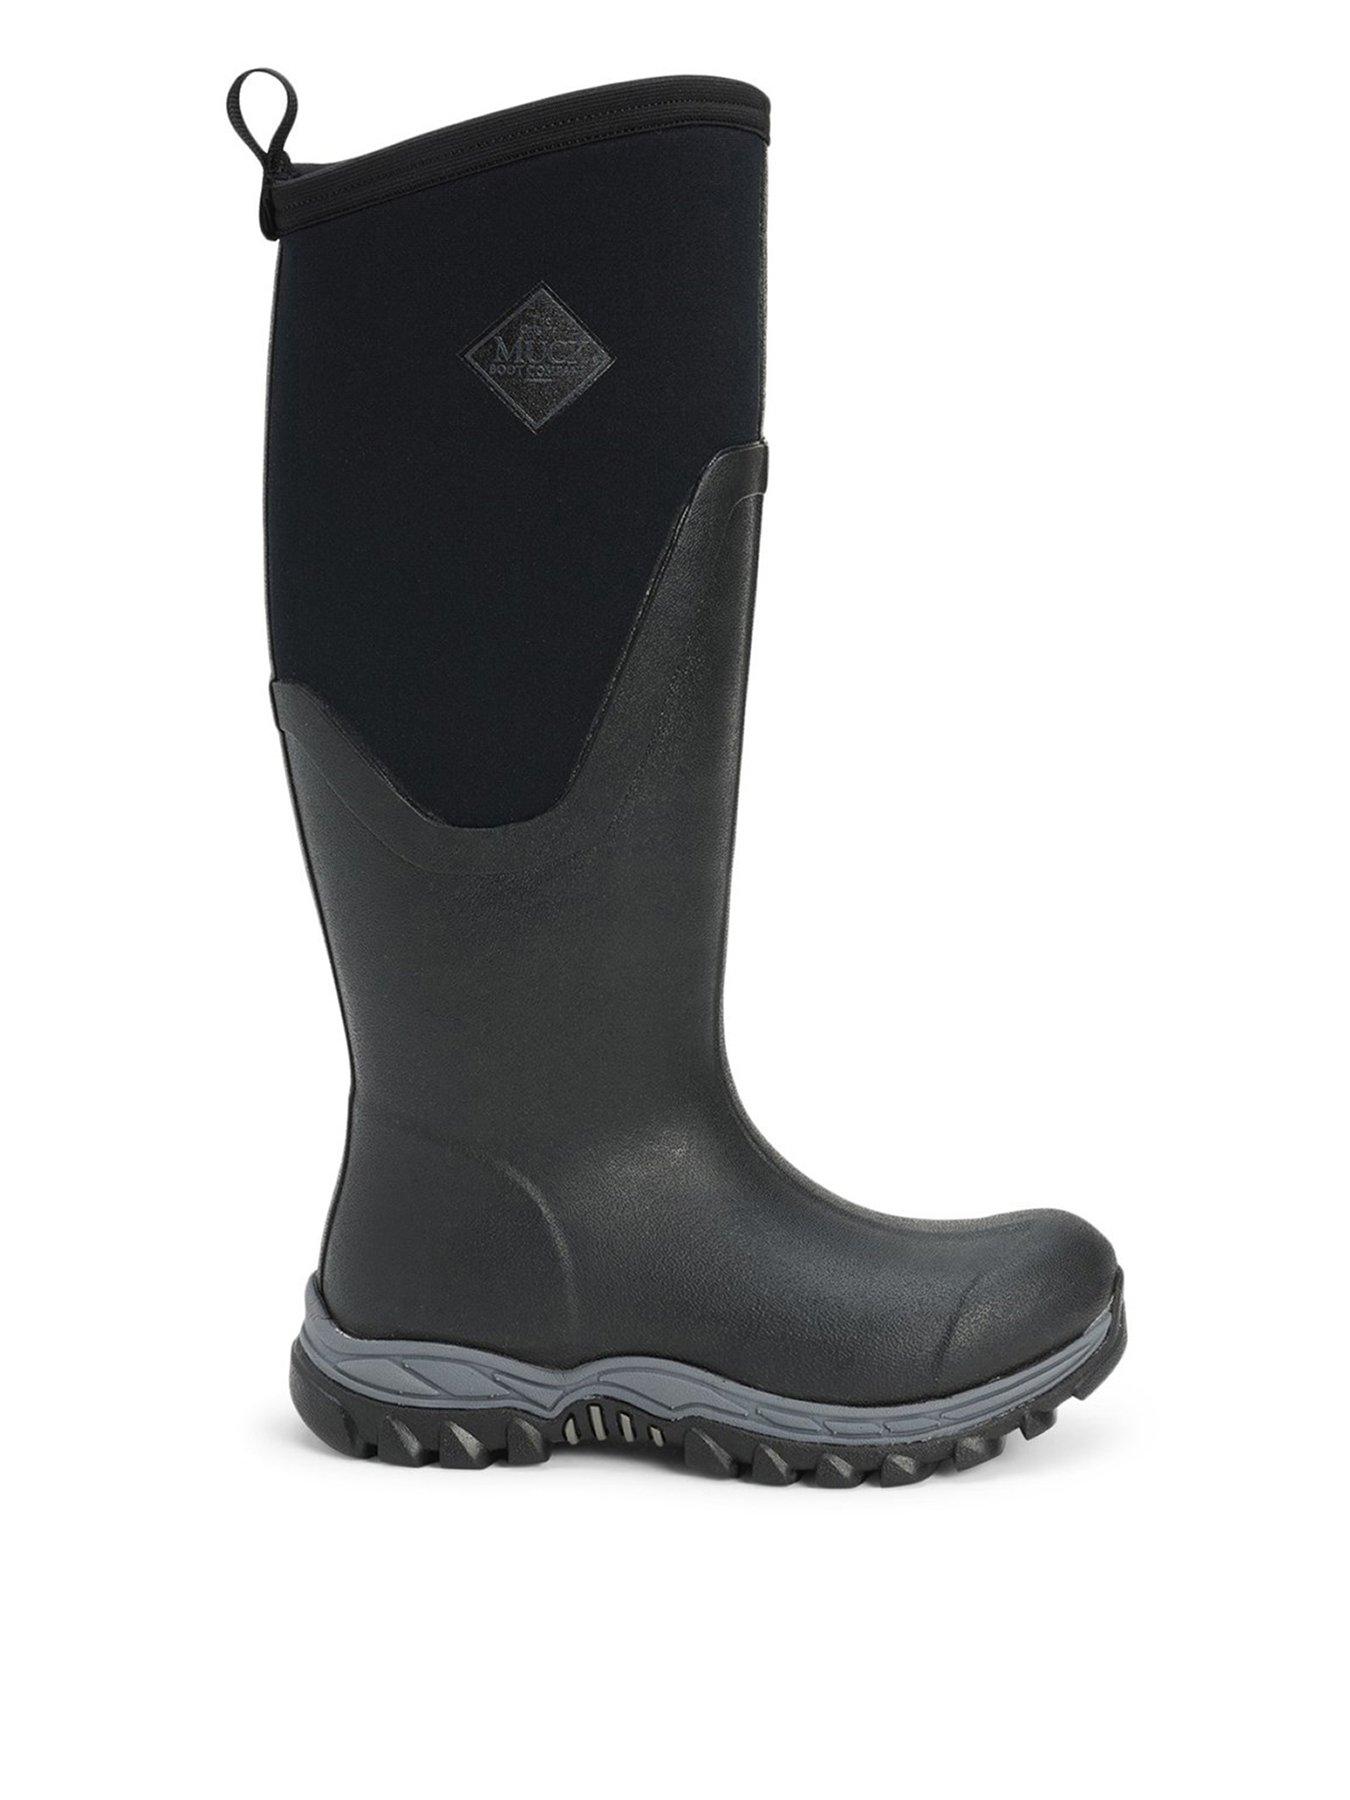 Muck Boots Ladies Arctic Sport Tall 2 - Black, Black, Size 3, Women